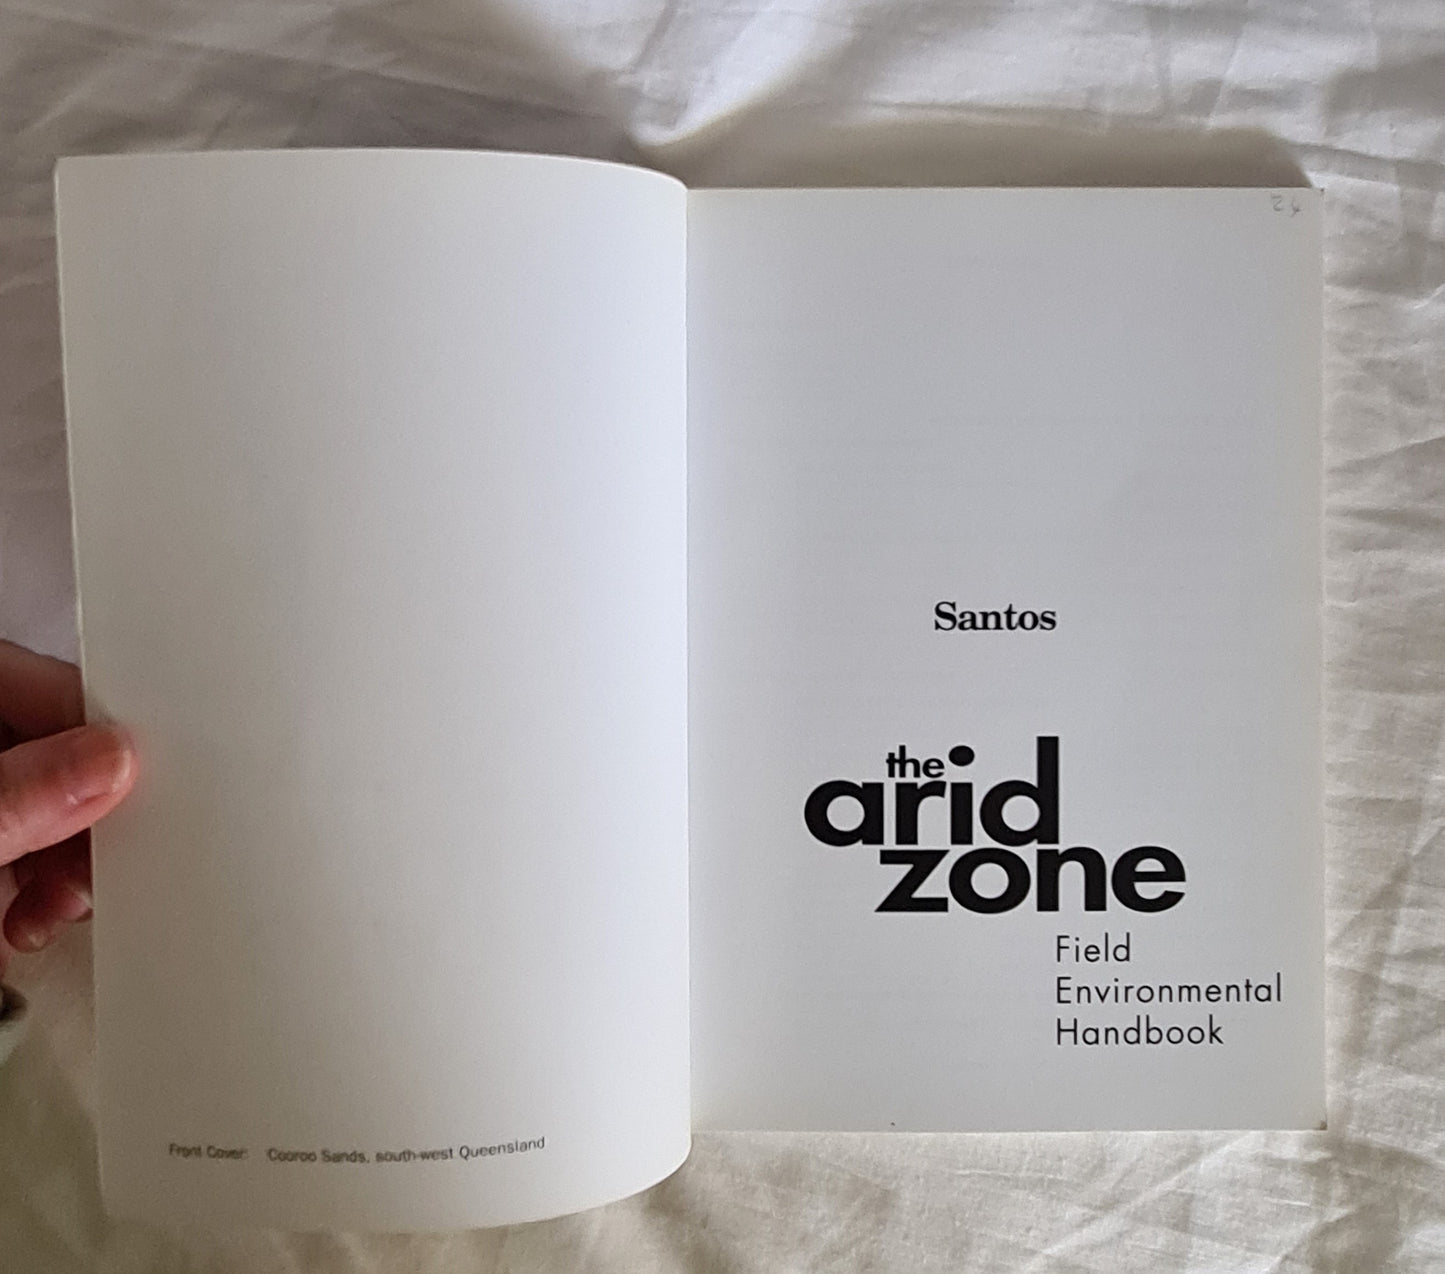 The Arid Zone by S. Bennett